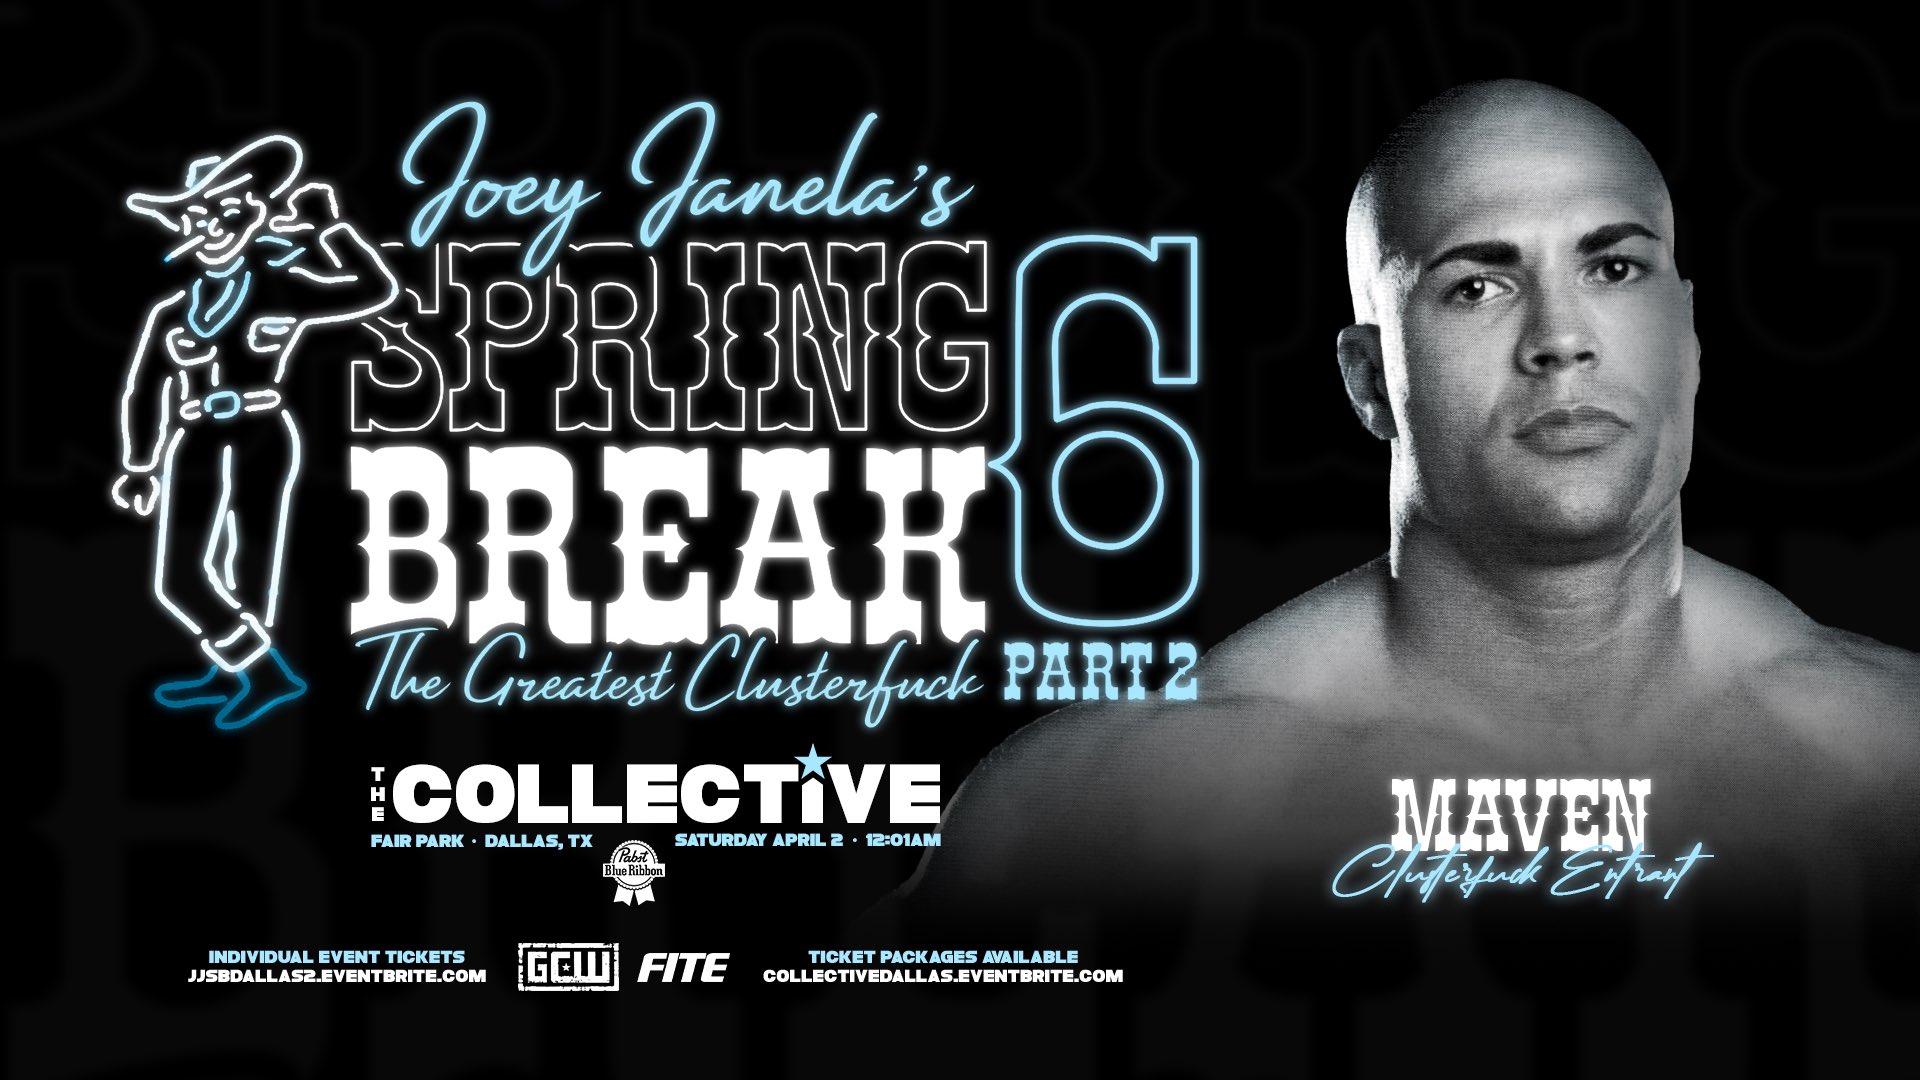 GCW Announces Maven For Joey Janela's Spring Break 6